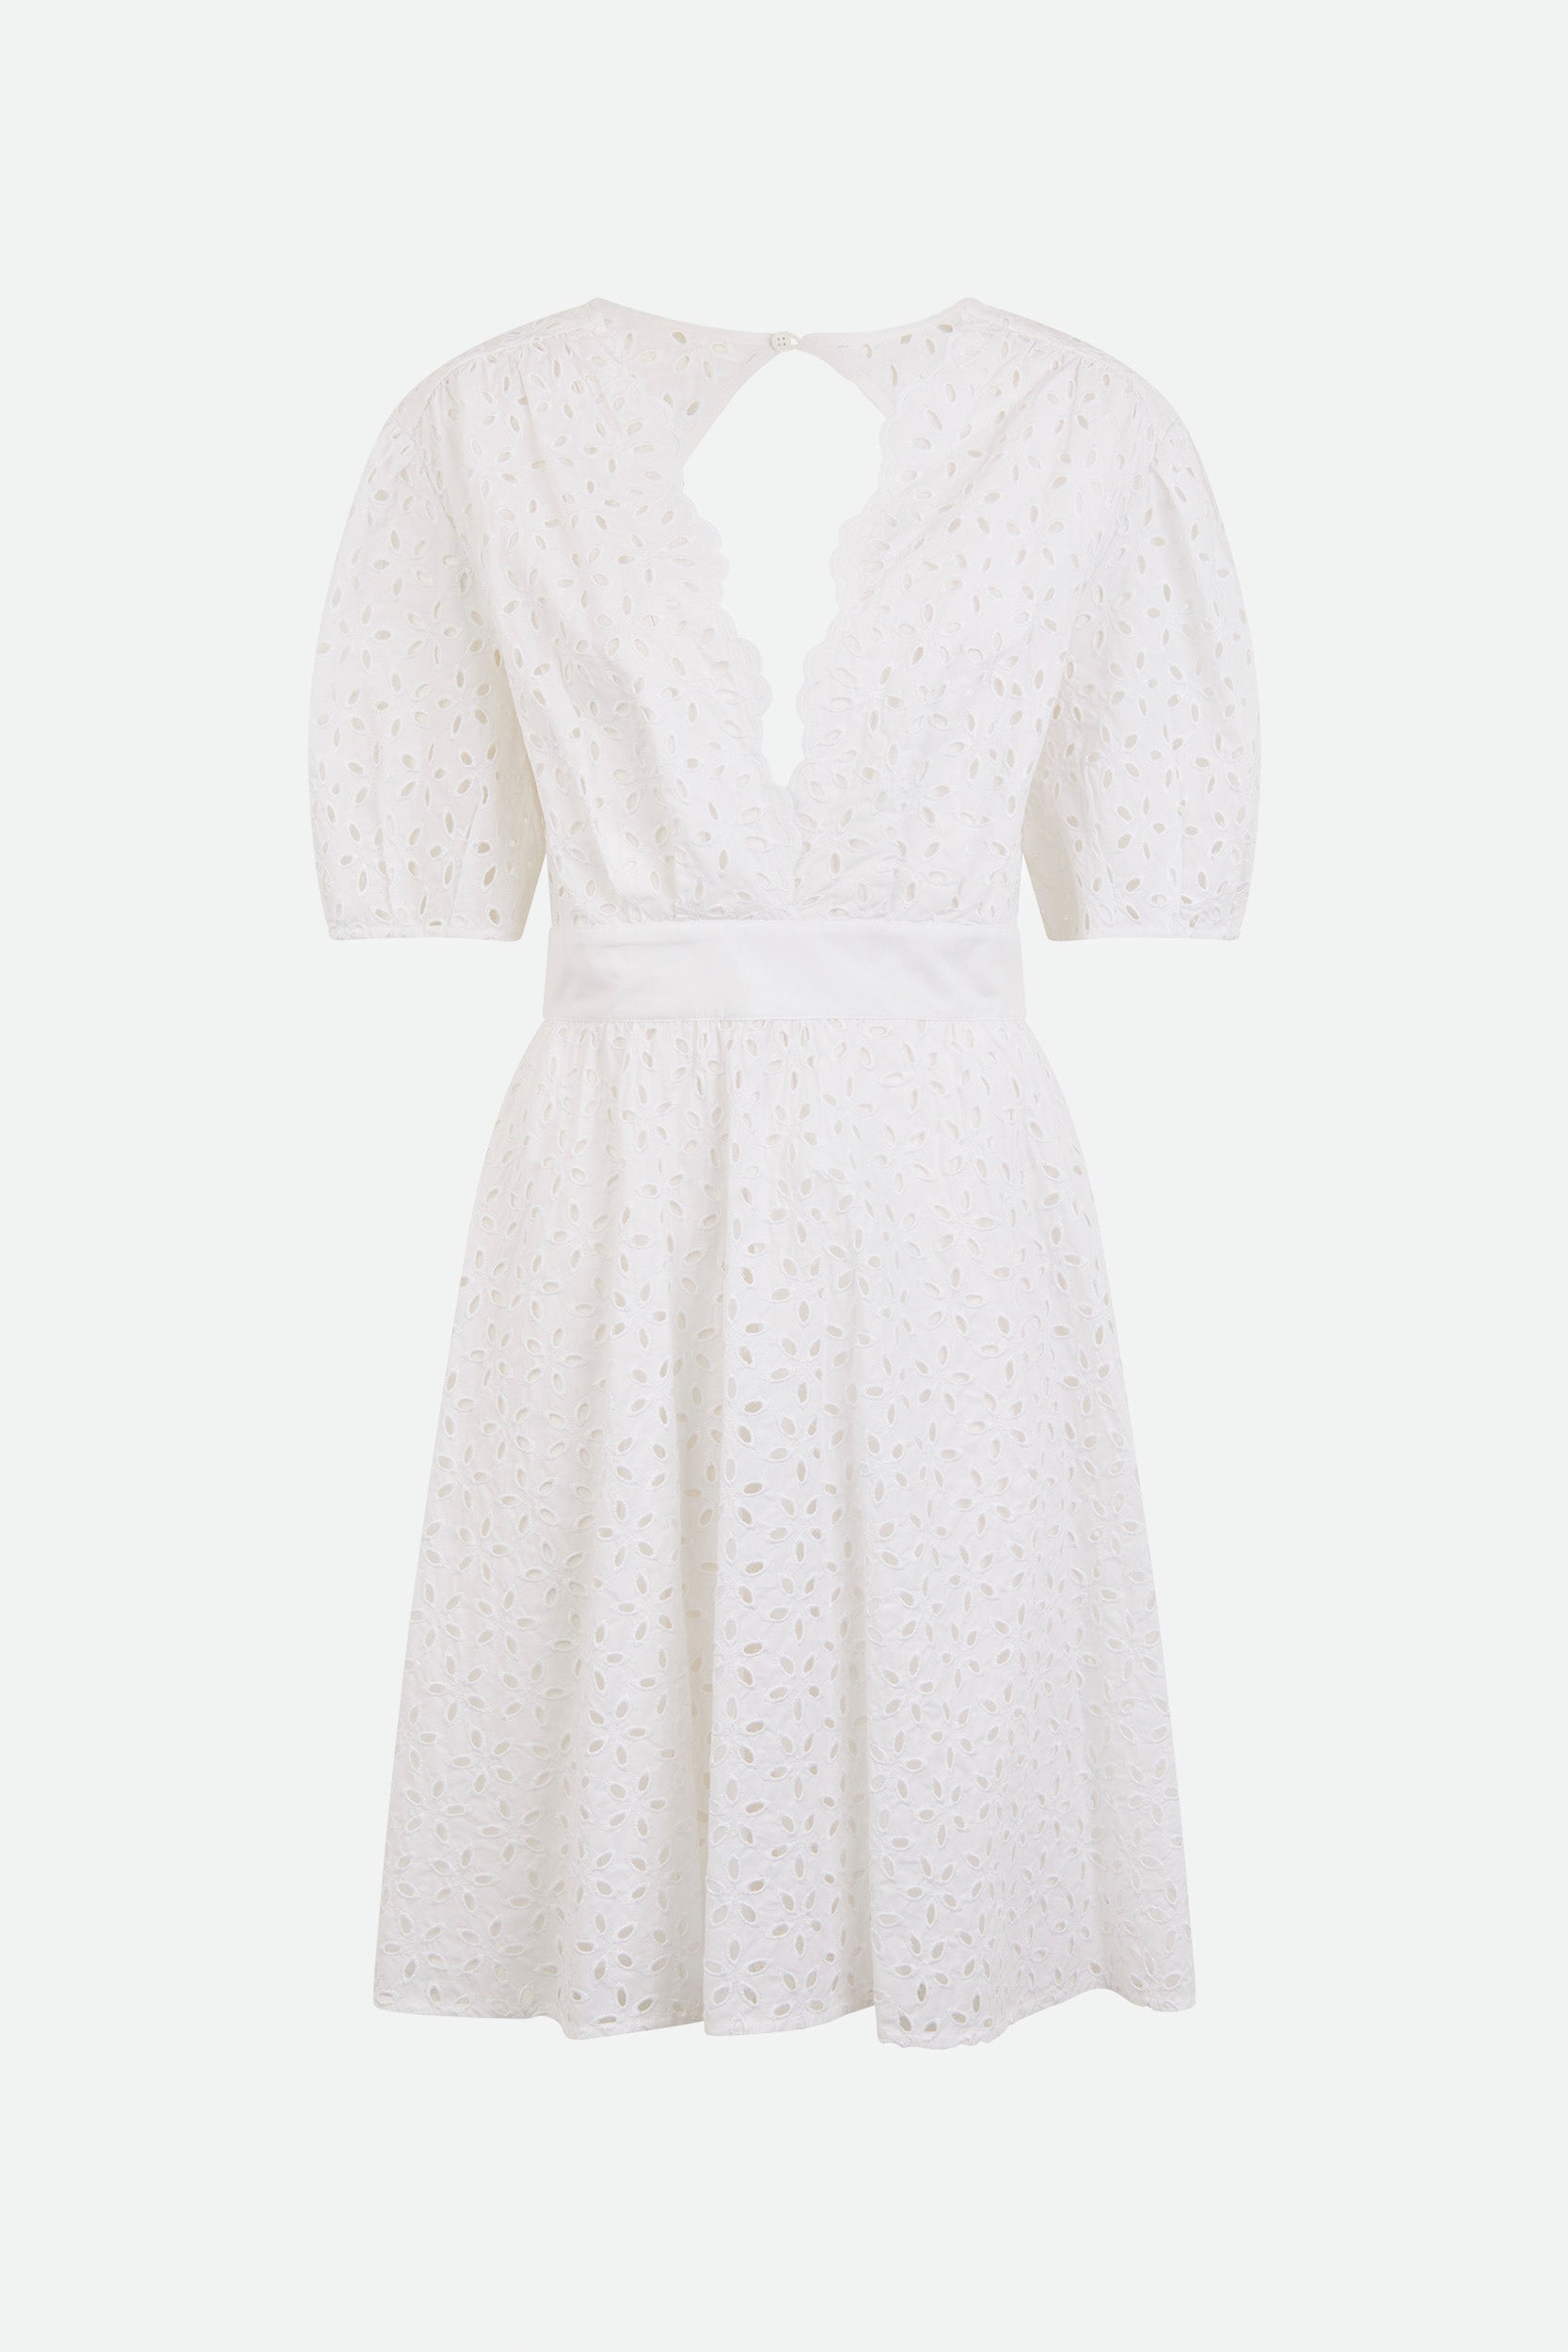 Pinko White Dress